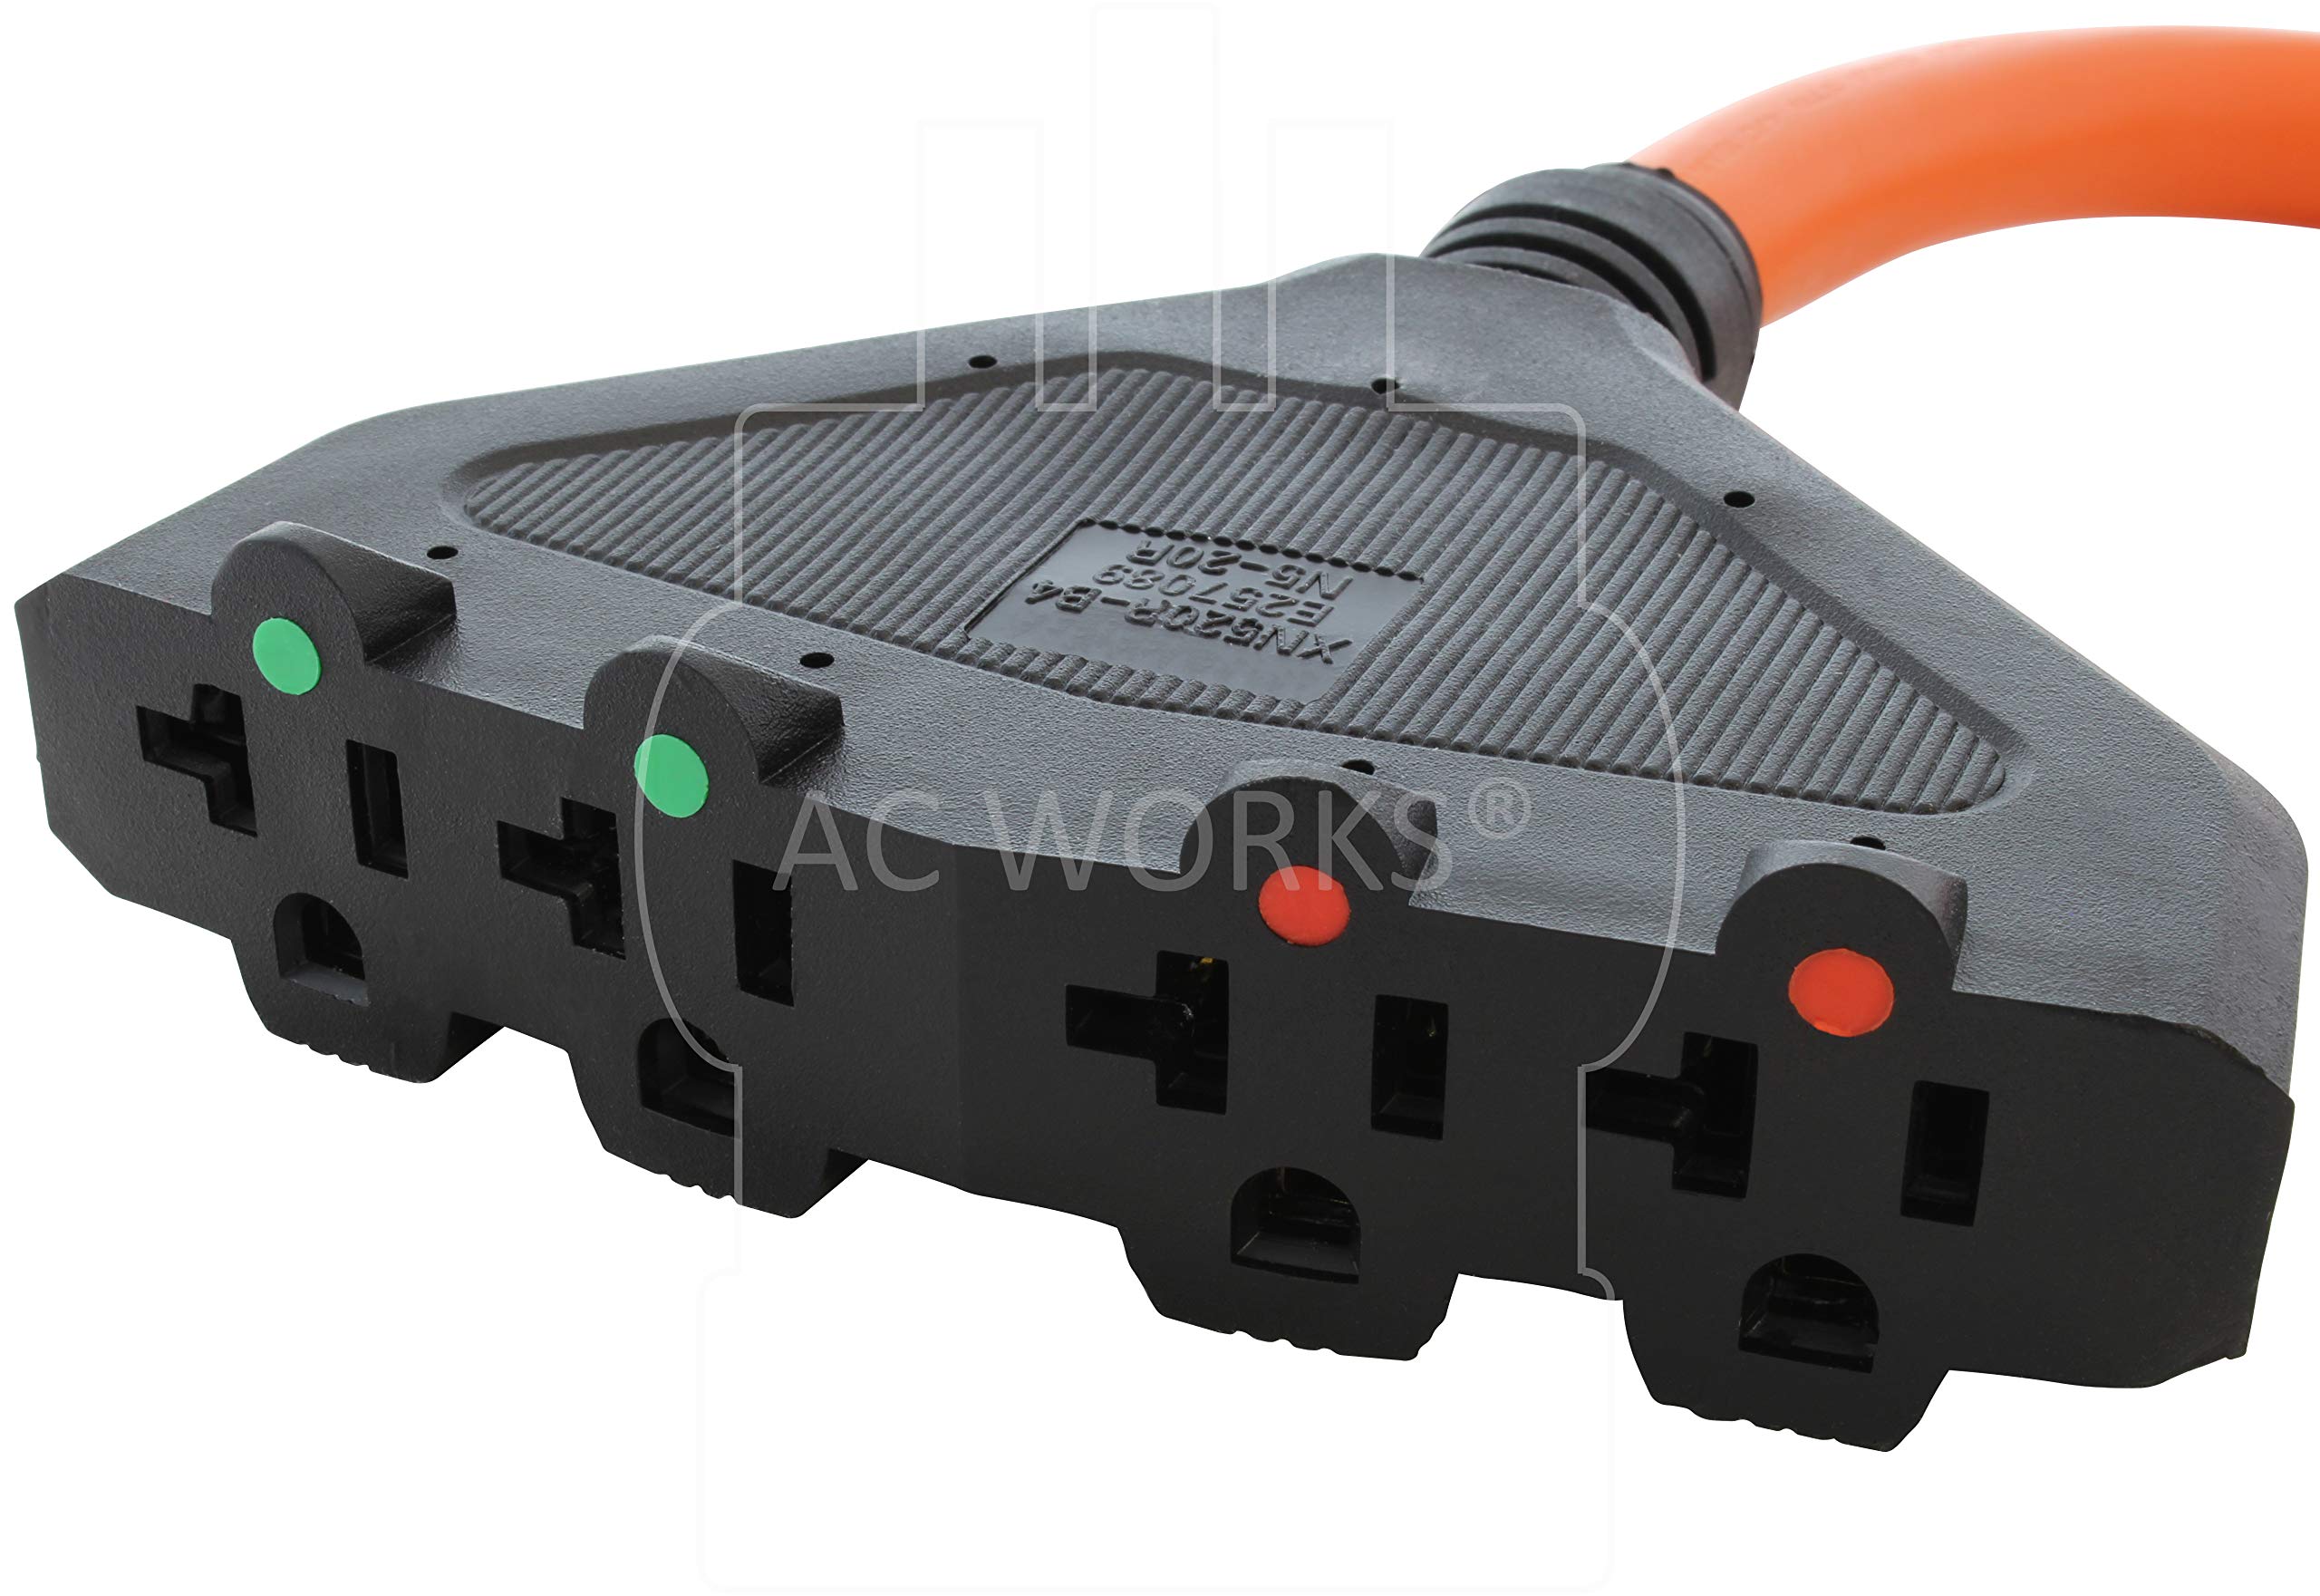 AC WORKS L14-20P 20Amp 4-Prong Generator Locking Plug to (4) NEMA 5-15/20R Household Connector (Orange-1.5FT)